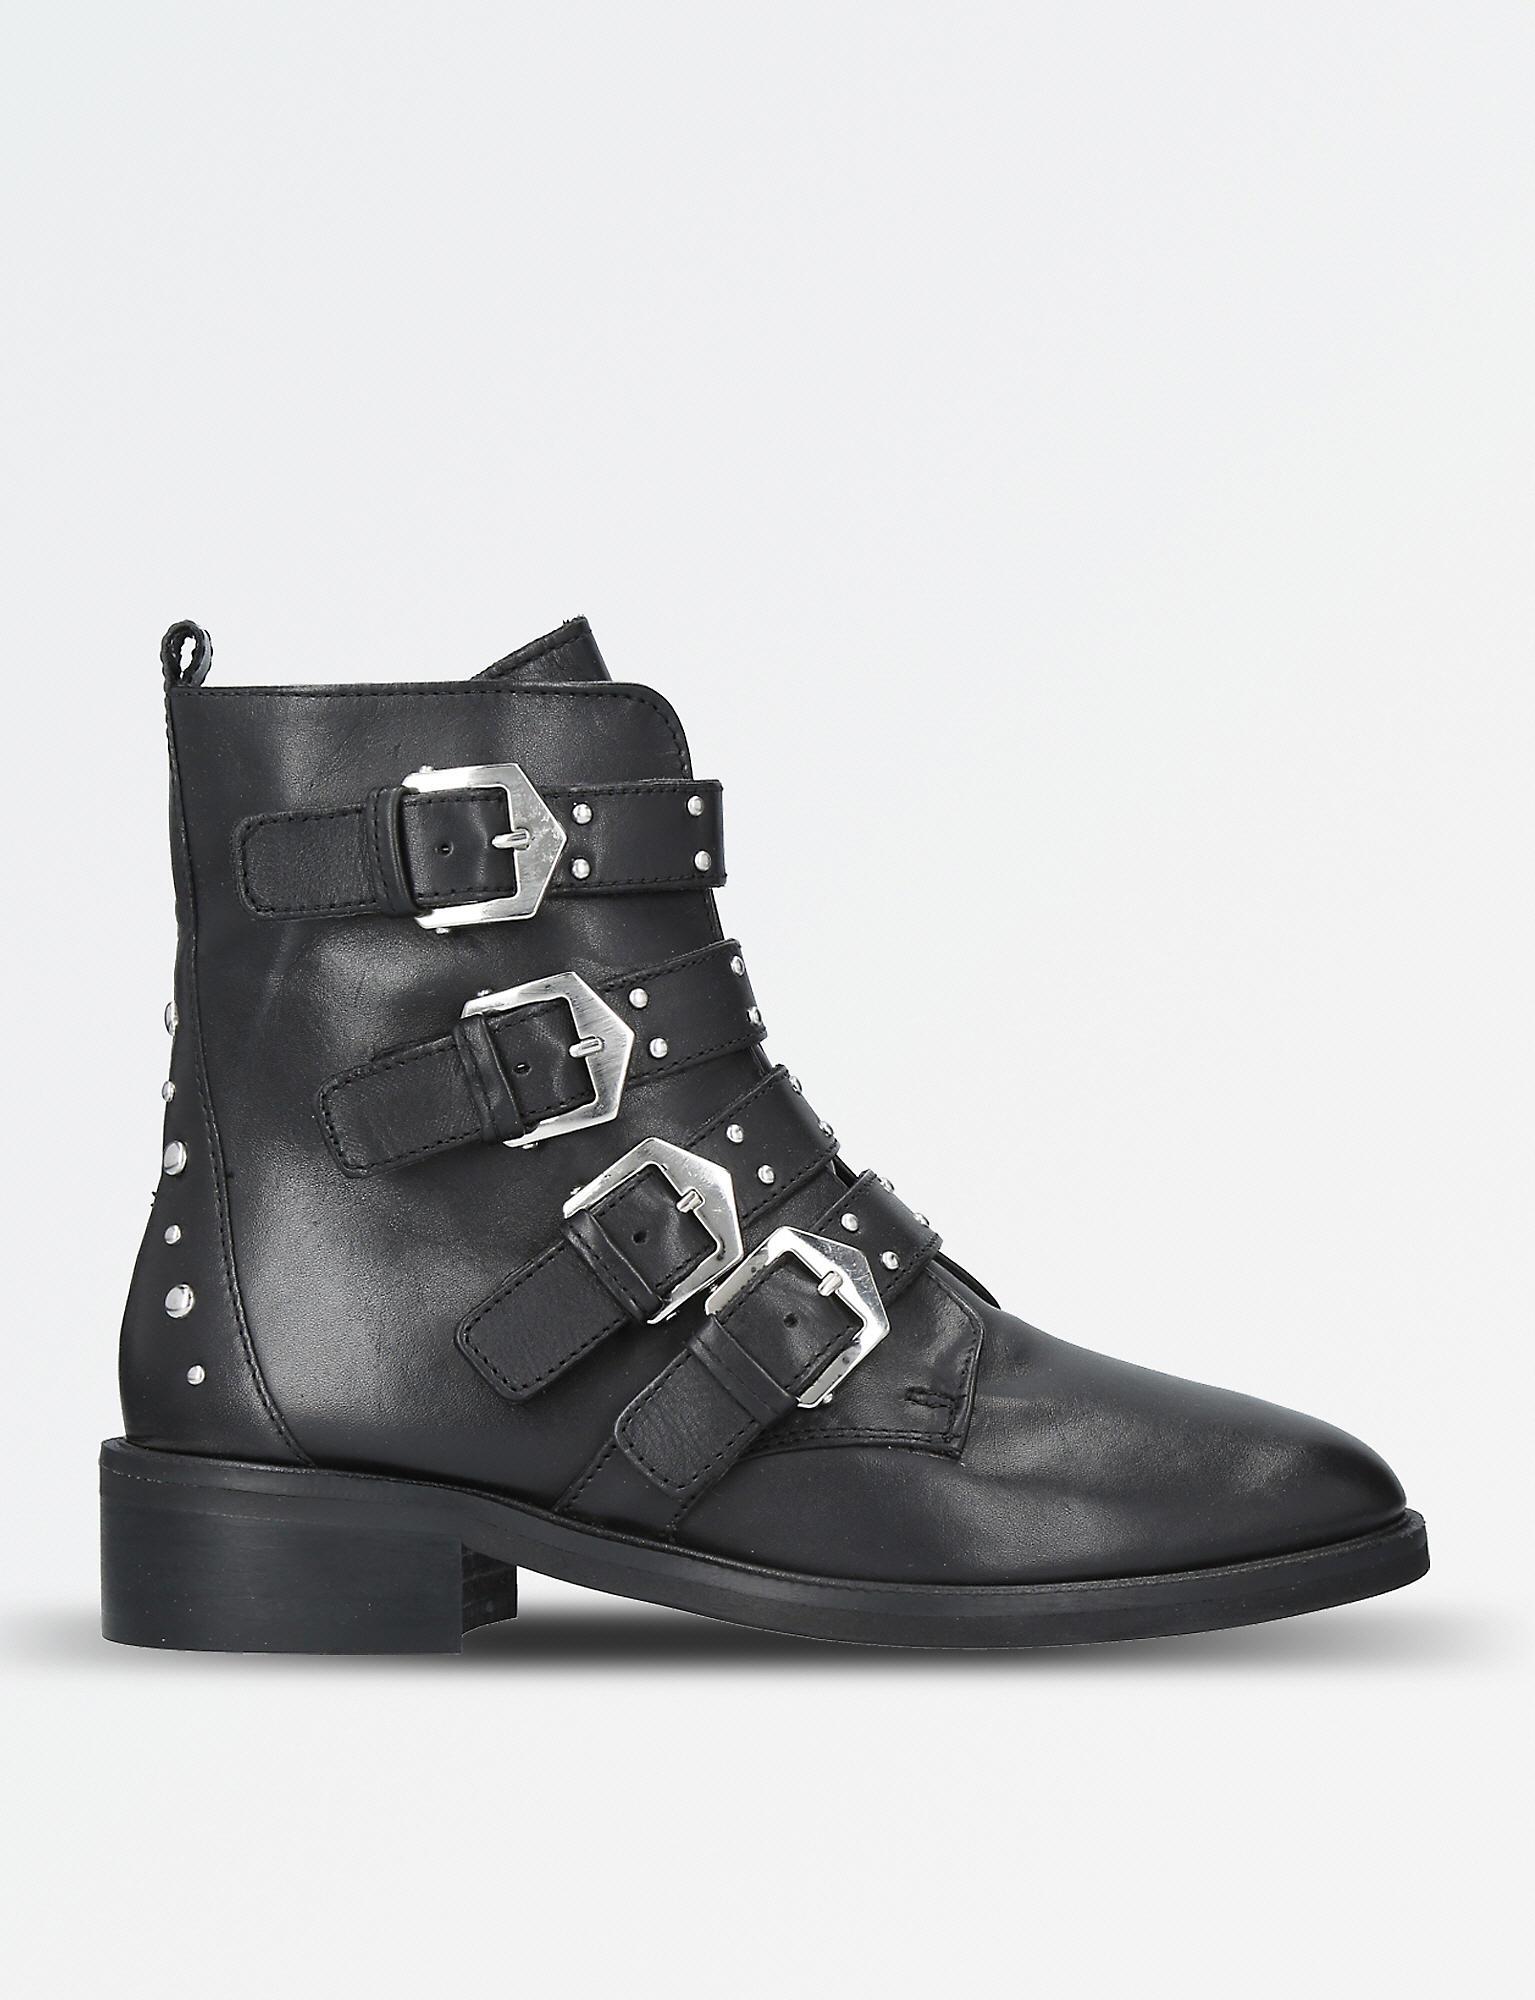 Carvela Kurt Geiger Scant Leather Ankle Boots in Black - Lyst